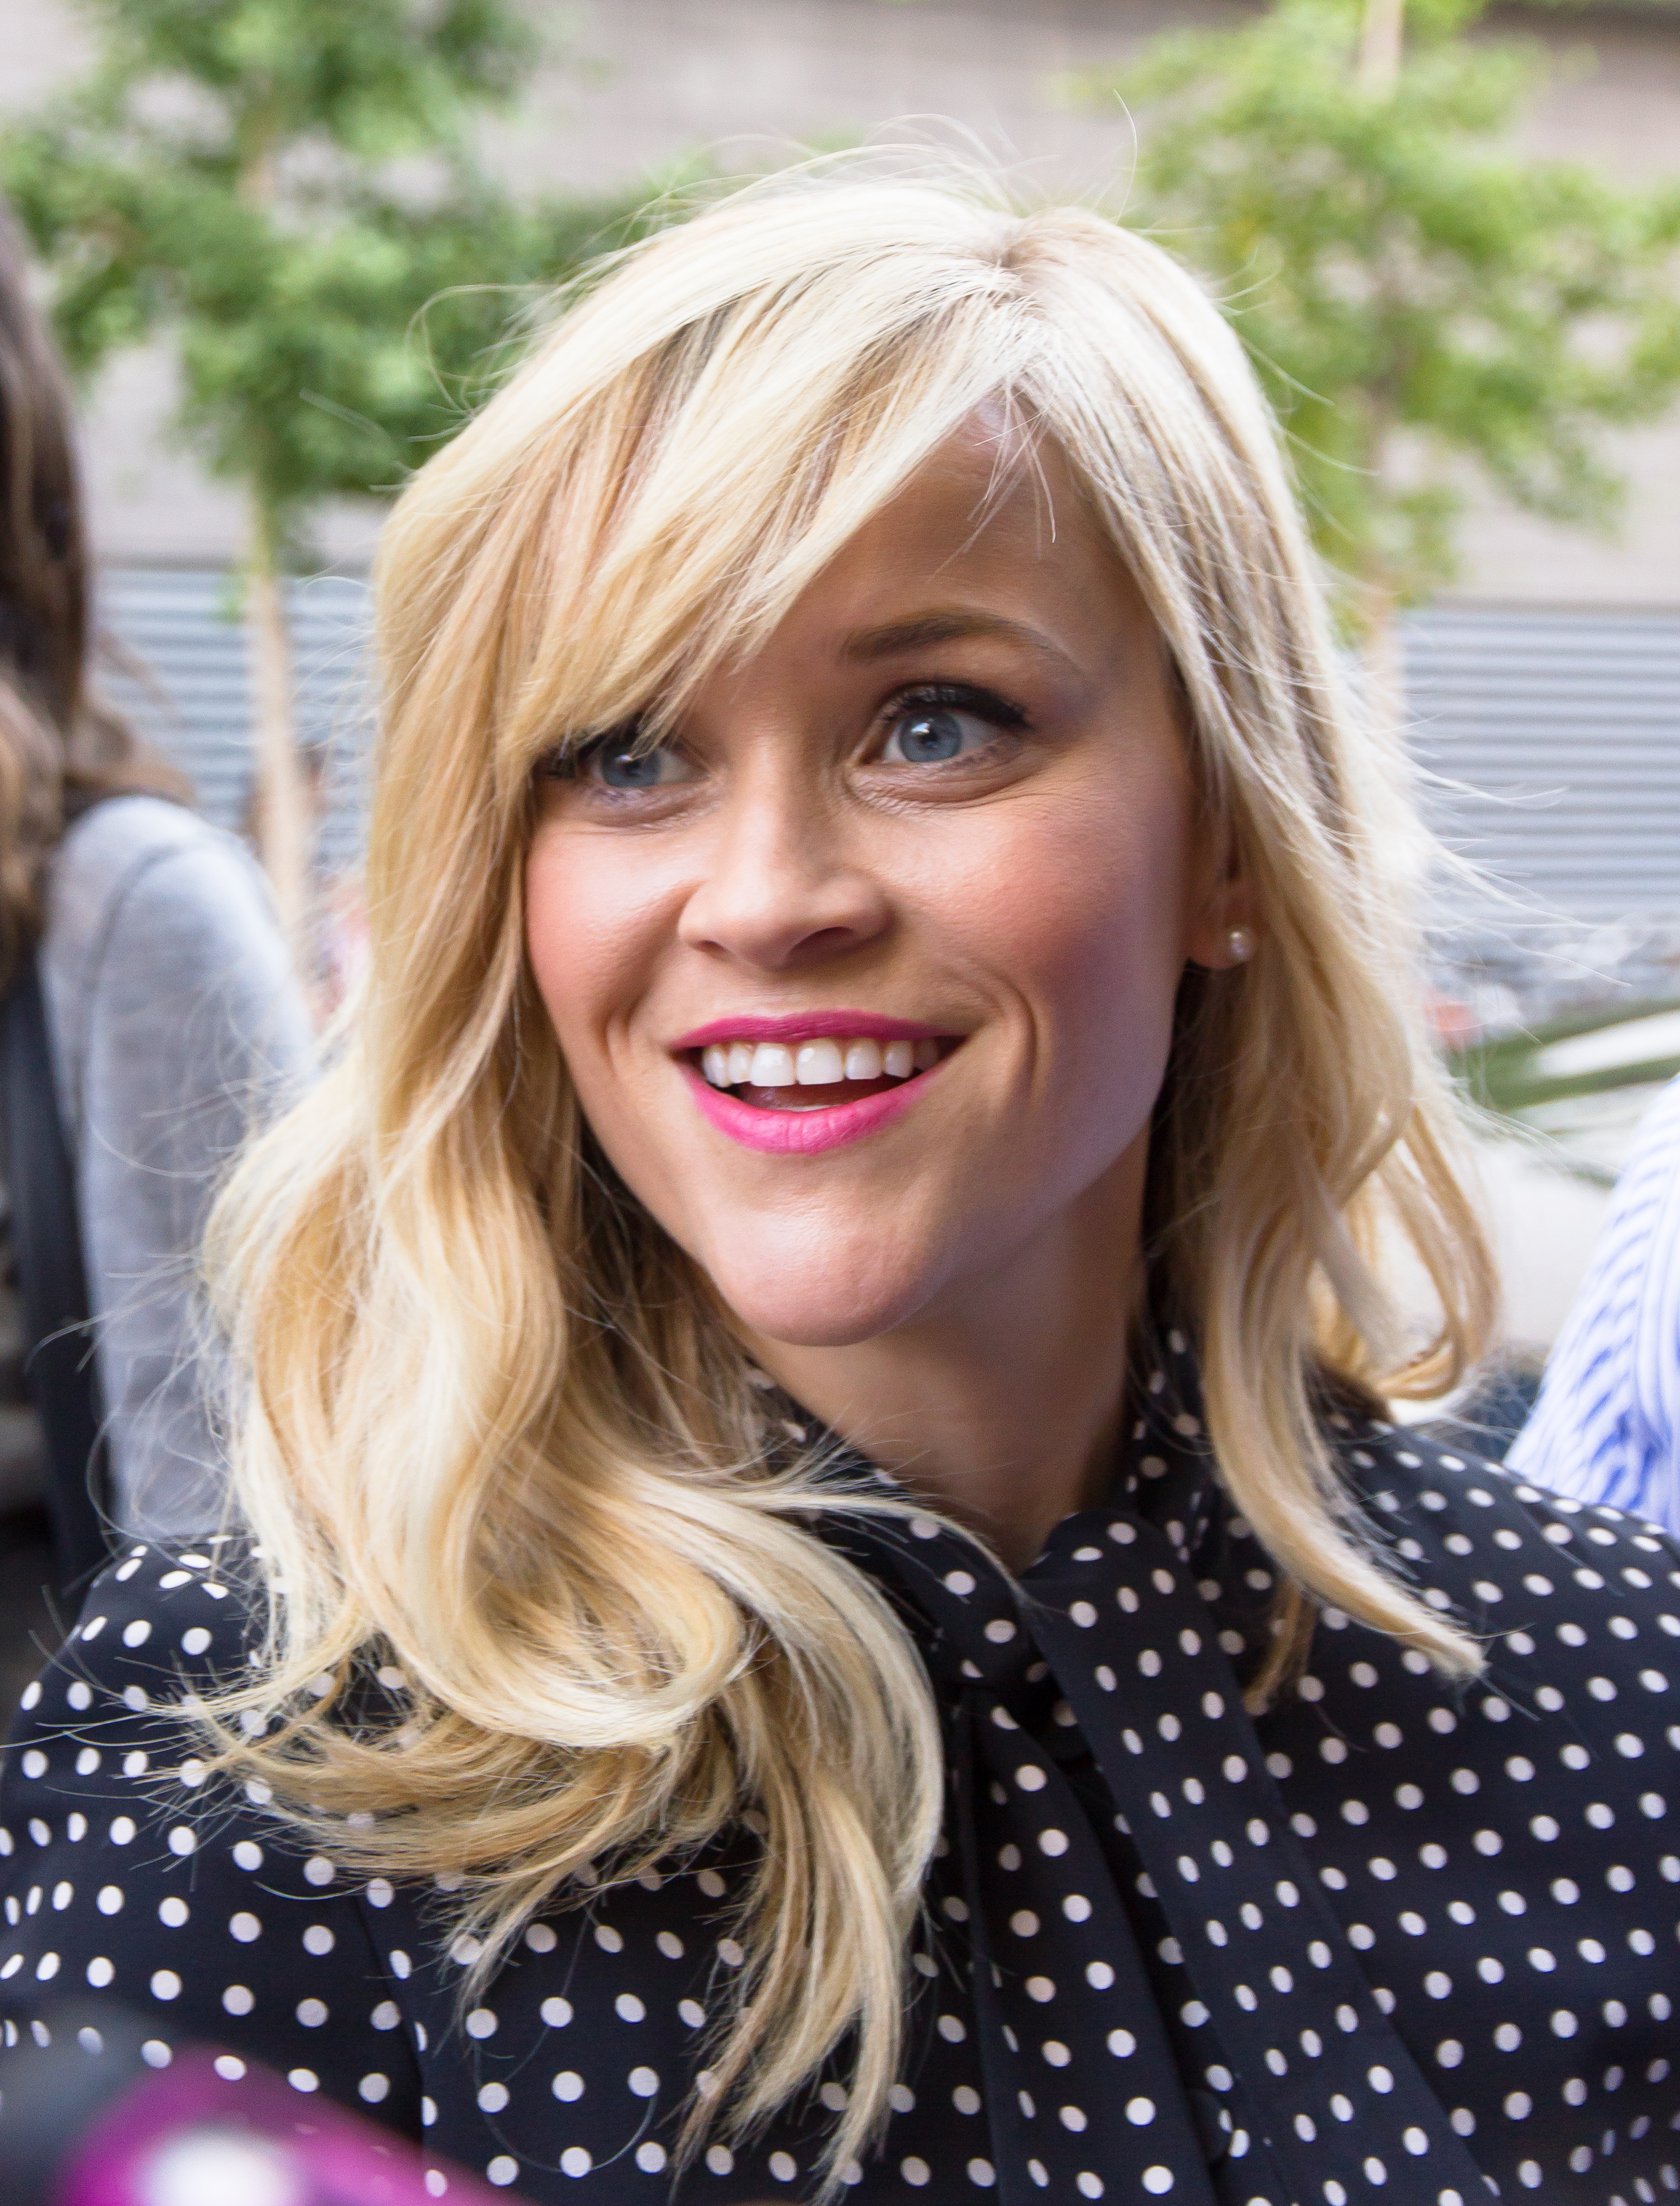 Reese_Witherspoon_at_TIFF_2014.jpg